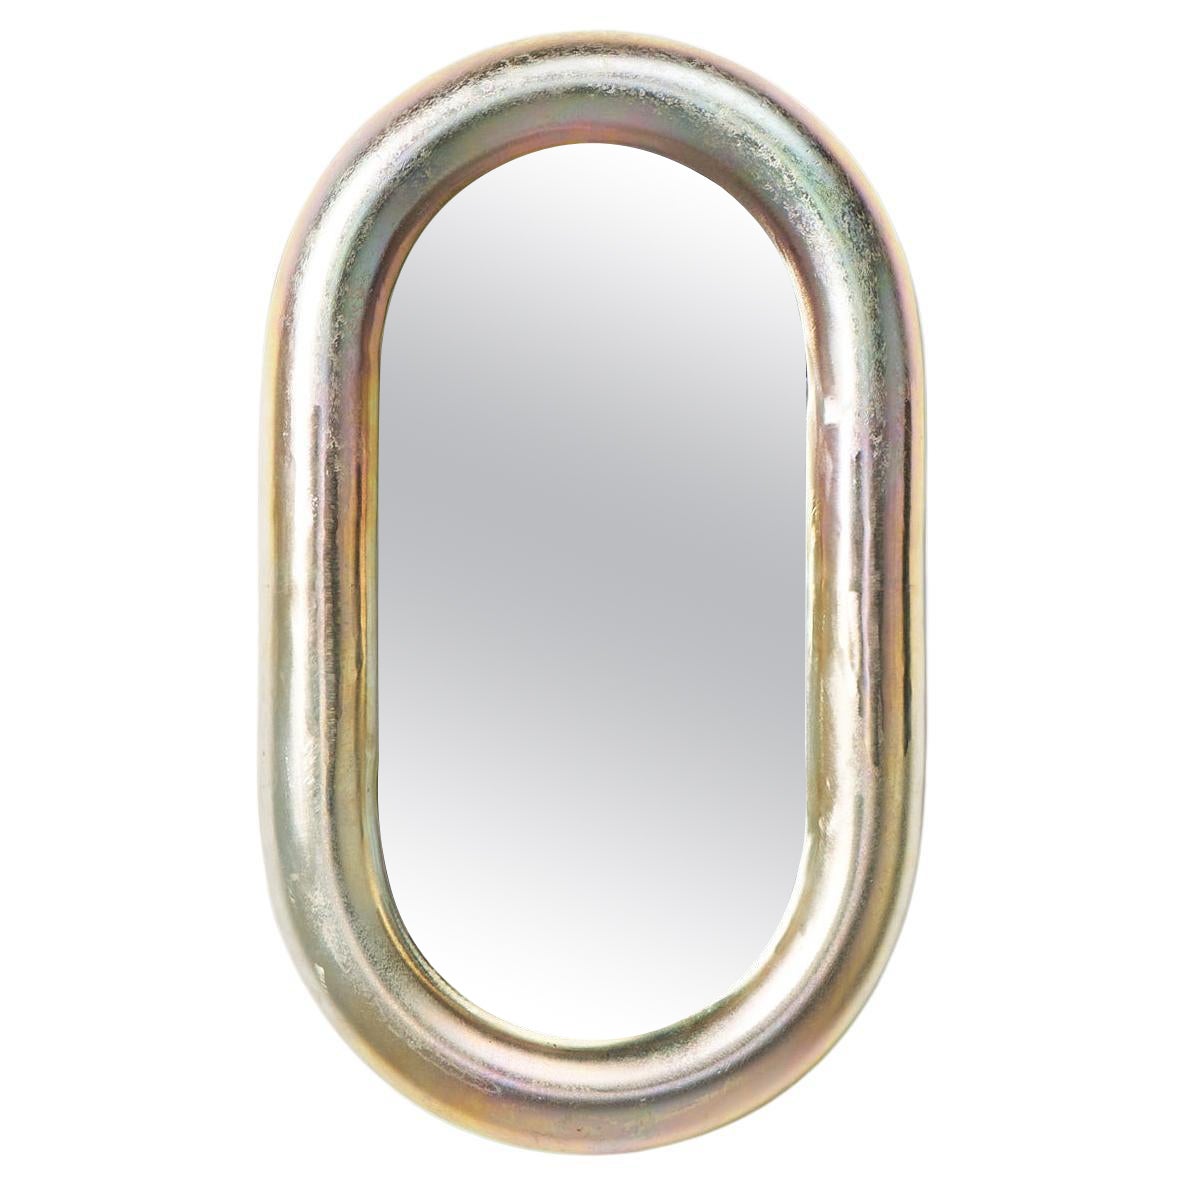 Curva Zincada Mirror by Cultivado Em Casa For Sale